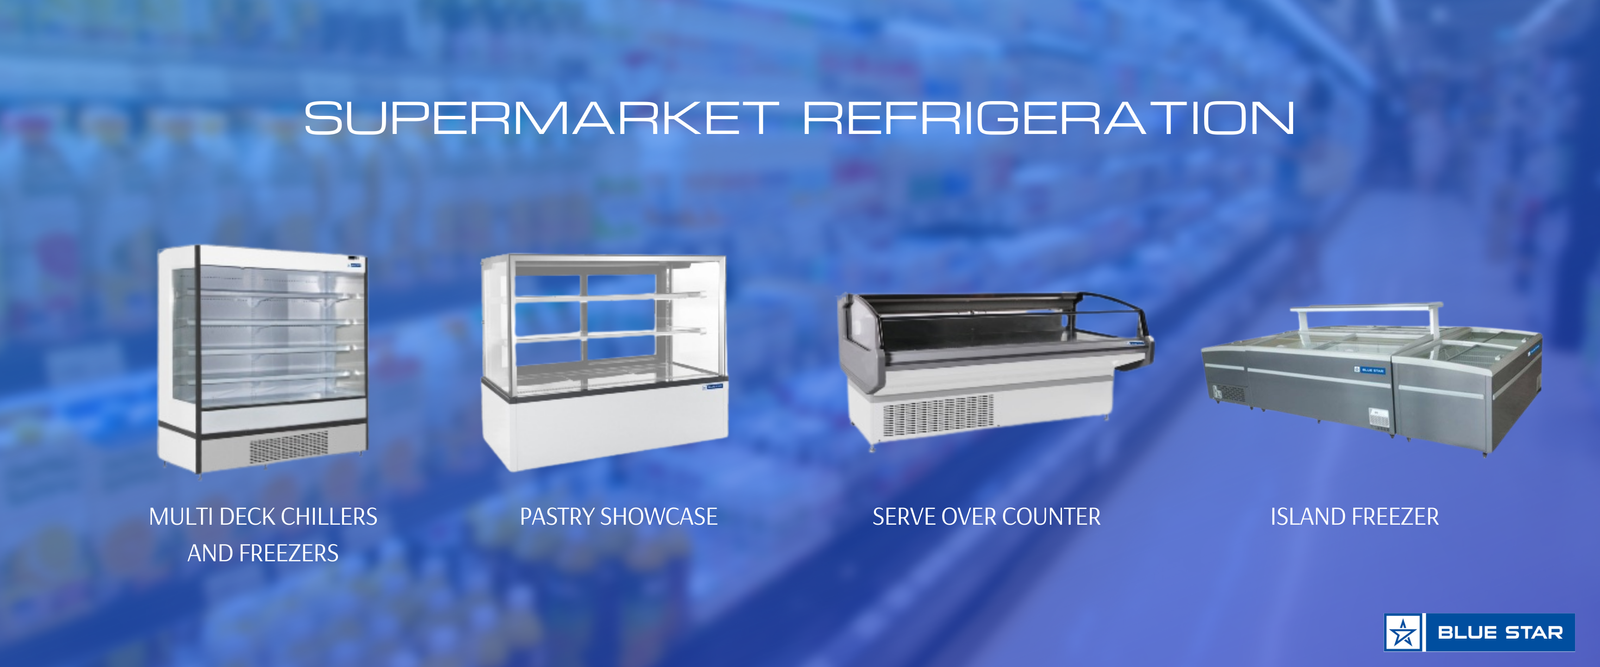 Supermarket refrigerators